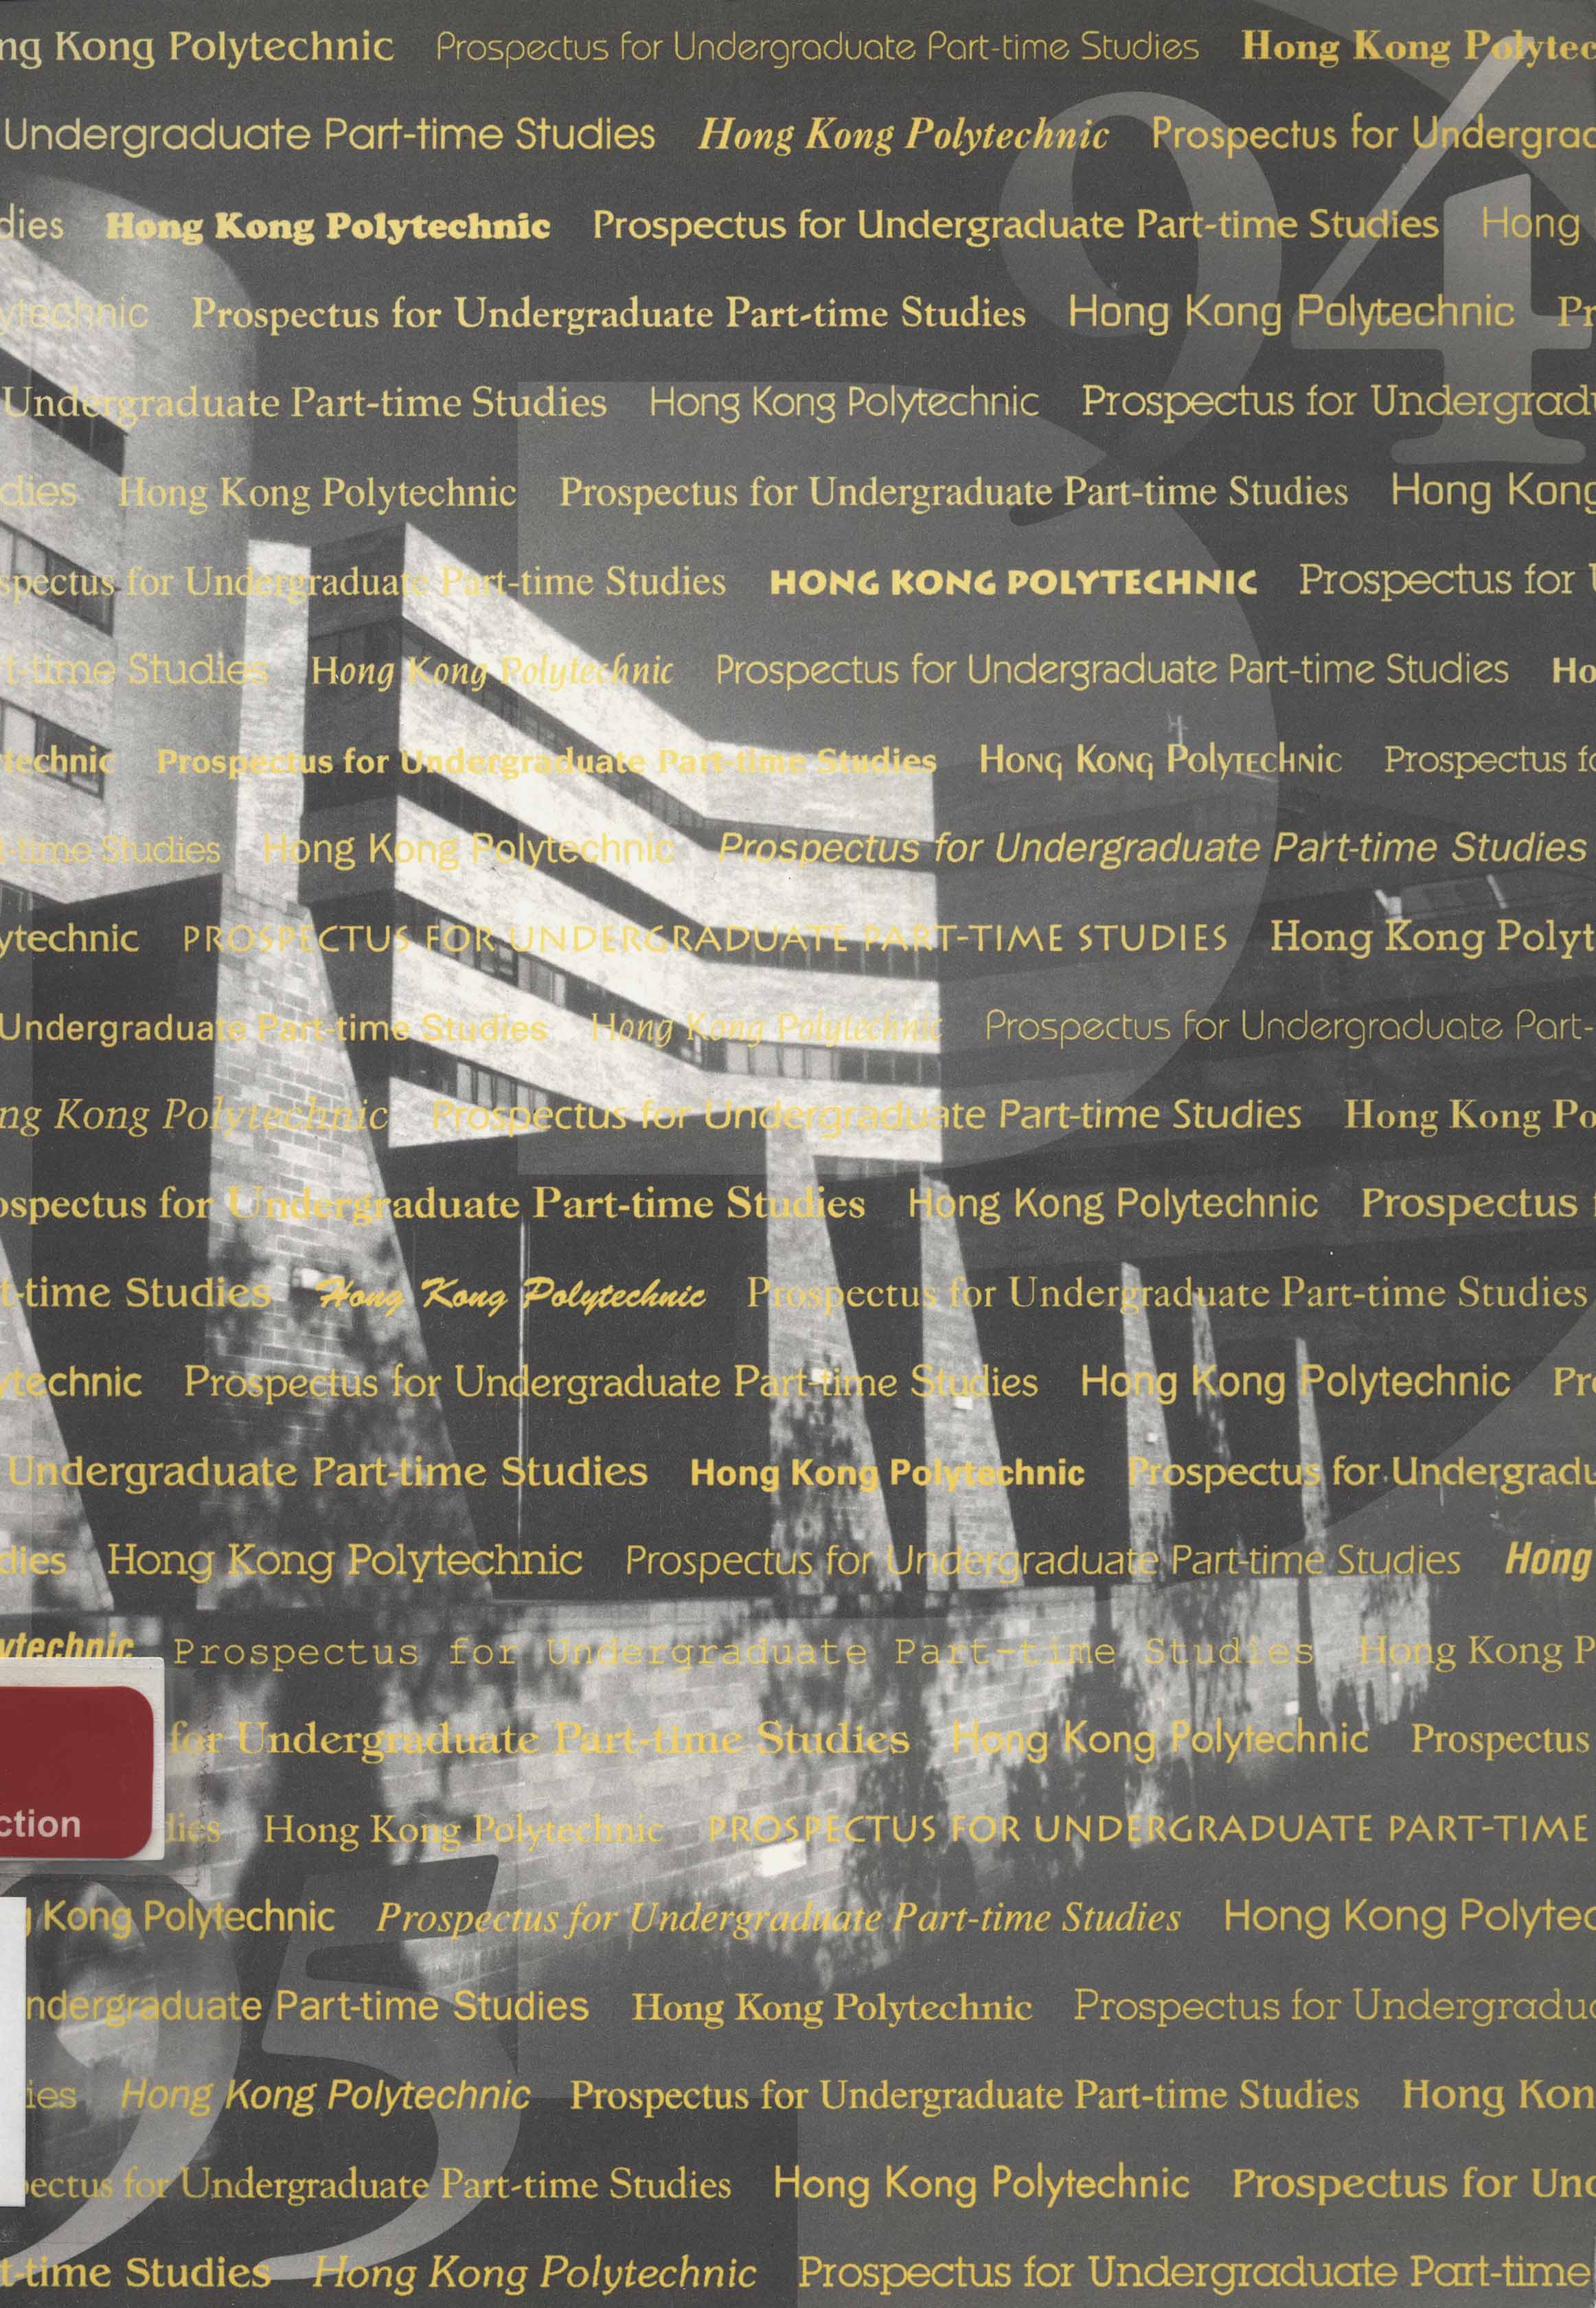 Hong Kong Polytechnic. Prospectus for undergraduate part-time studies 1994/95